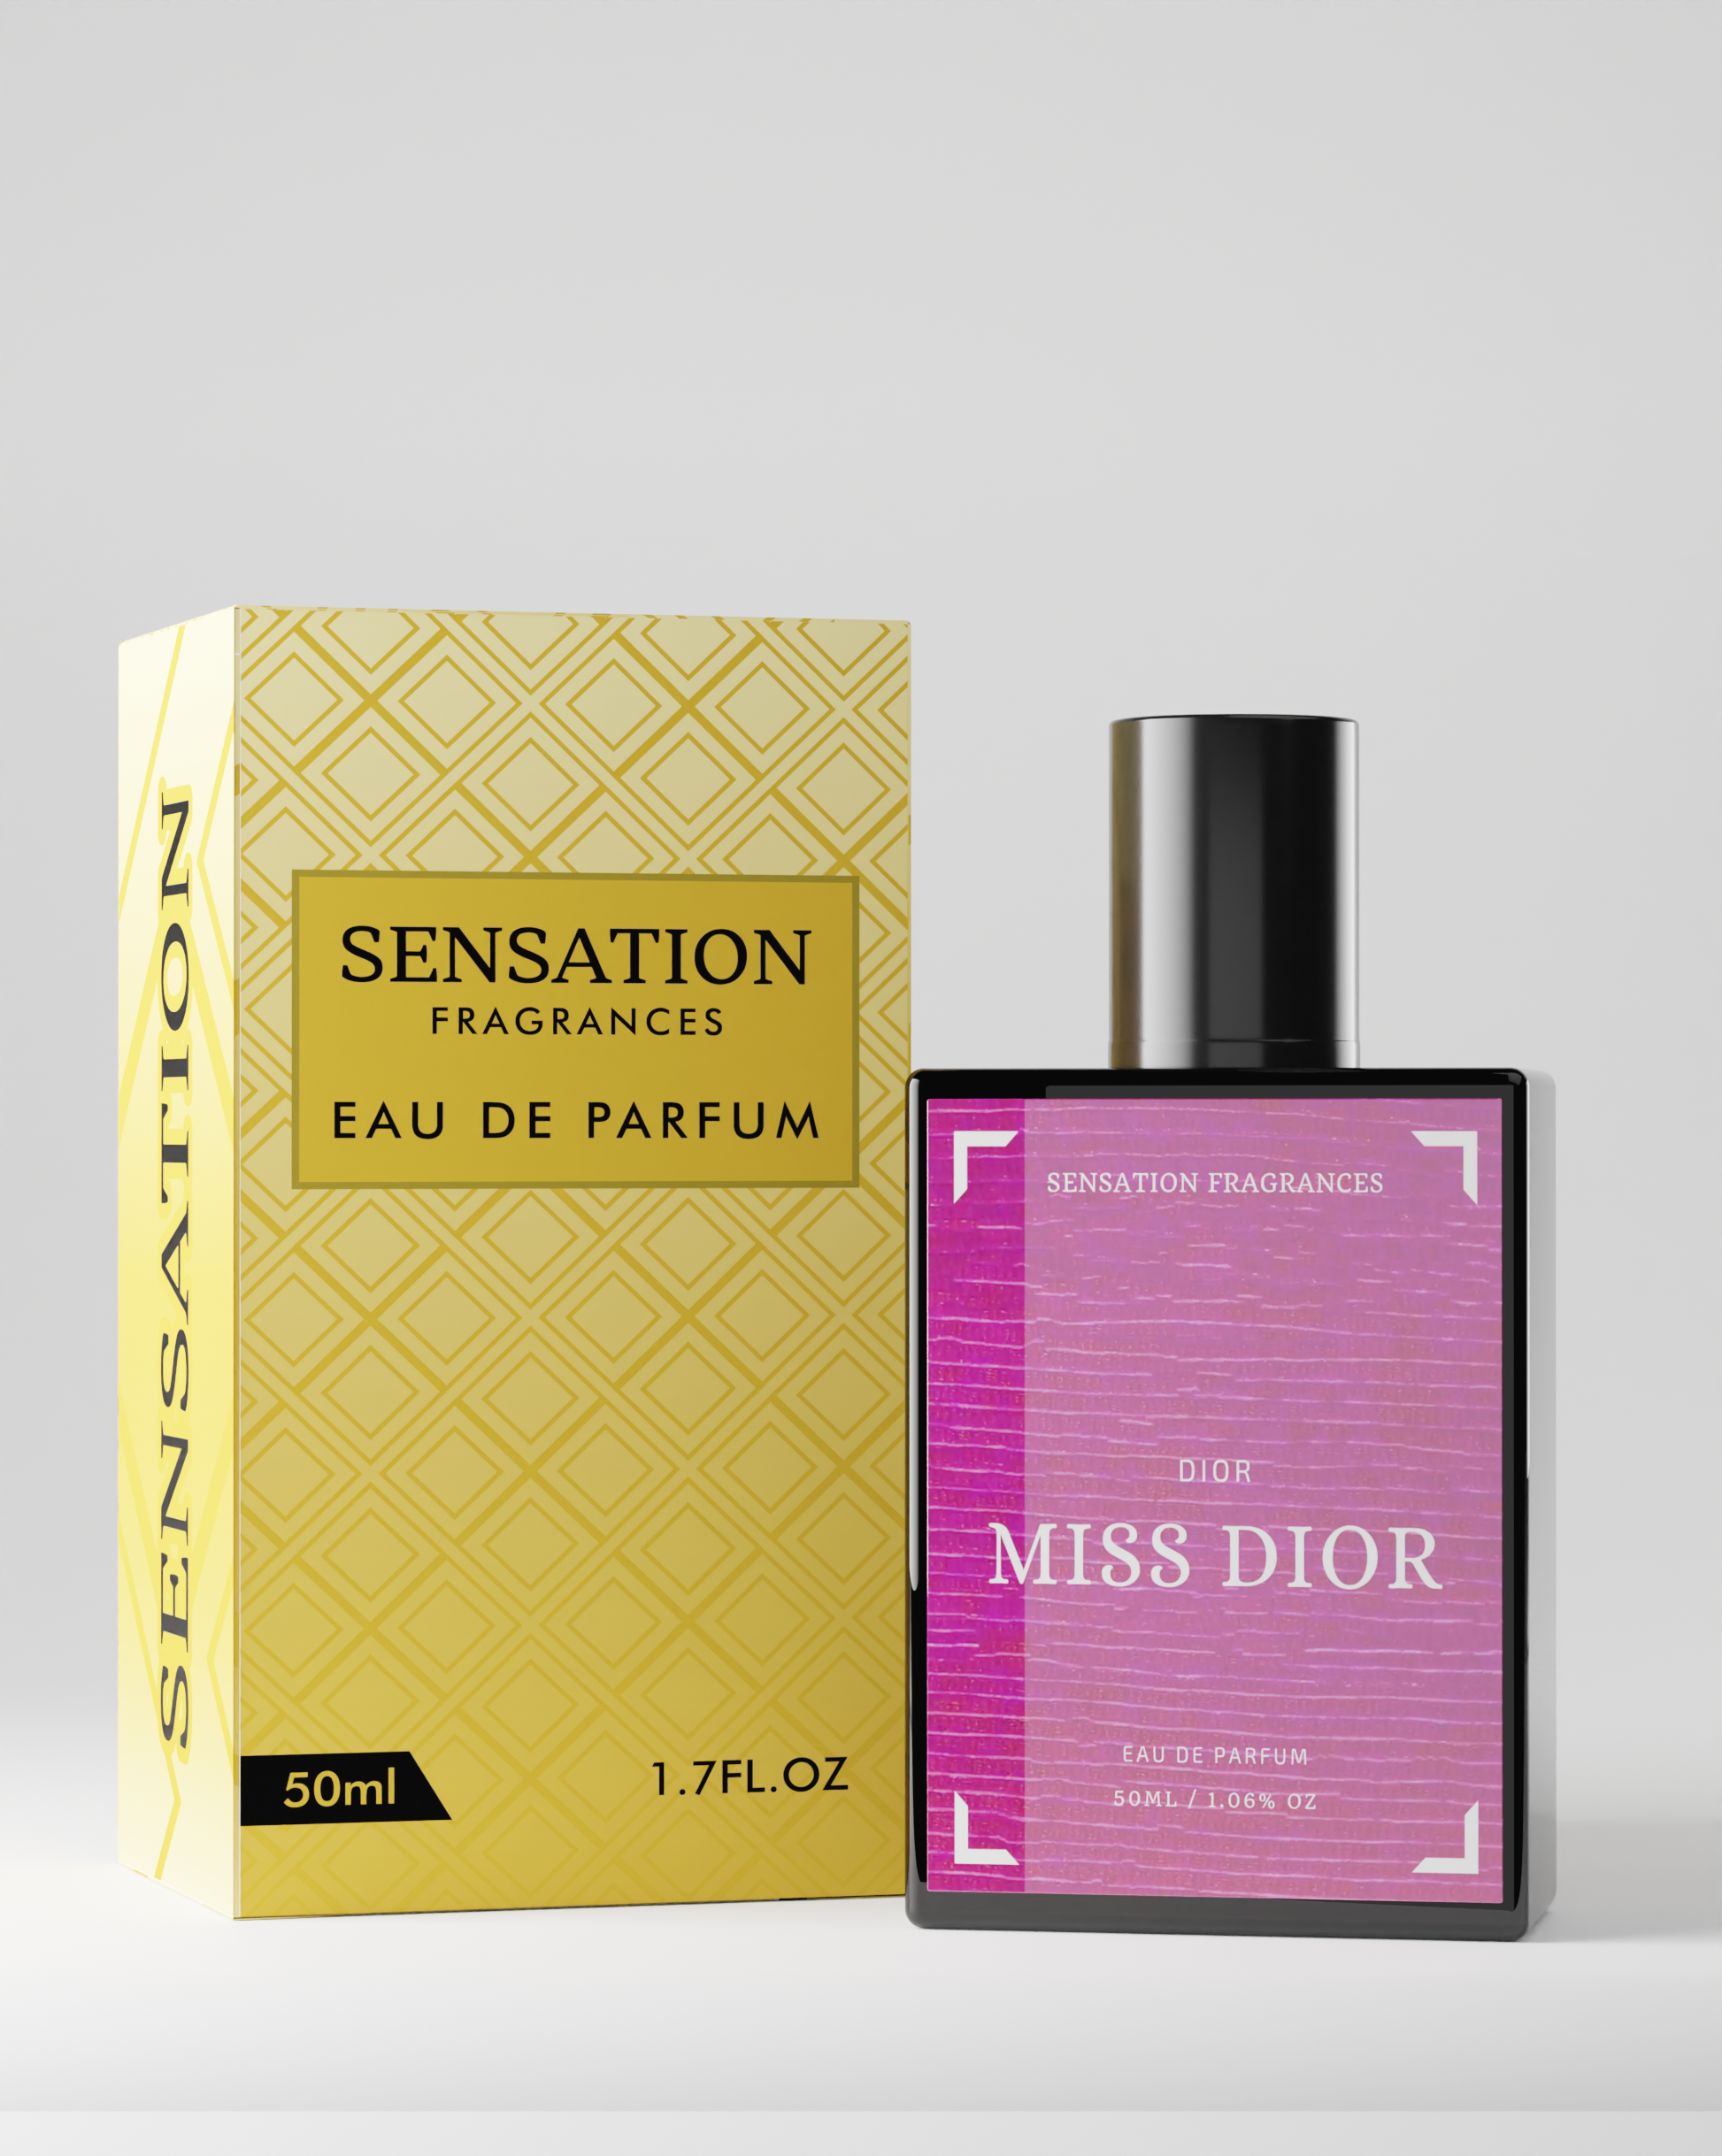 Christian Dior SE Parfums Christian Dior Miss Dior Perfume Logo, perfume,  angle, text png